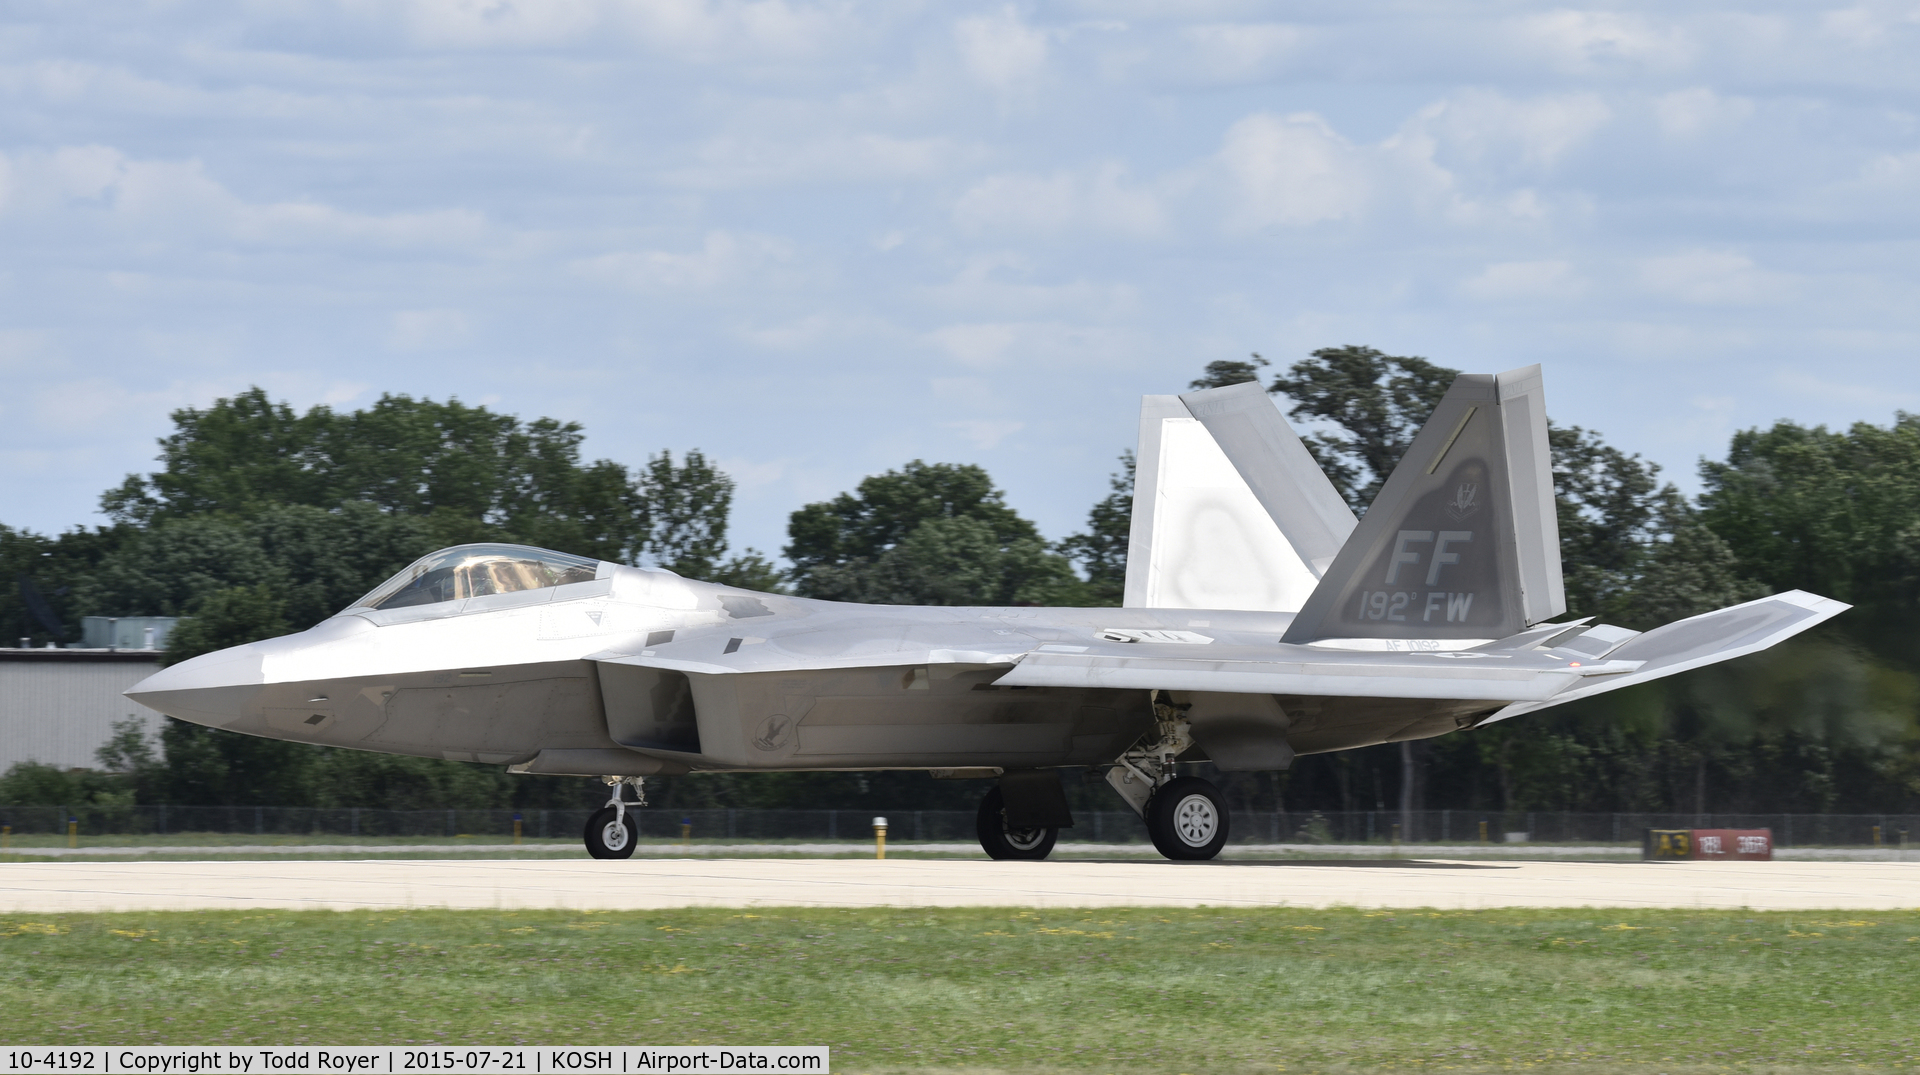 10-4192, 2010 Lockheed Martin F-22A Raptor C/N 4192, Airventure 2015